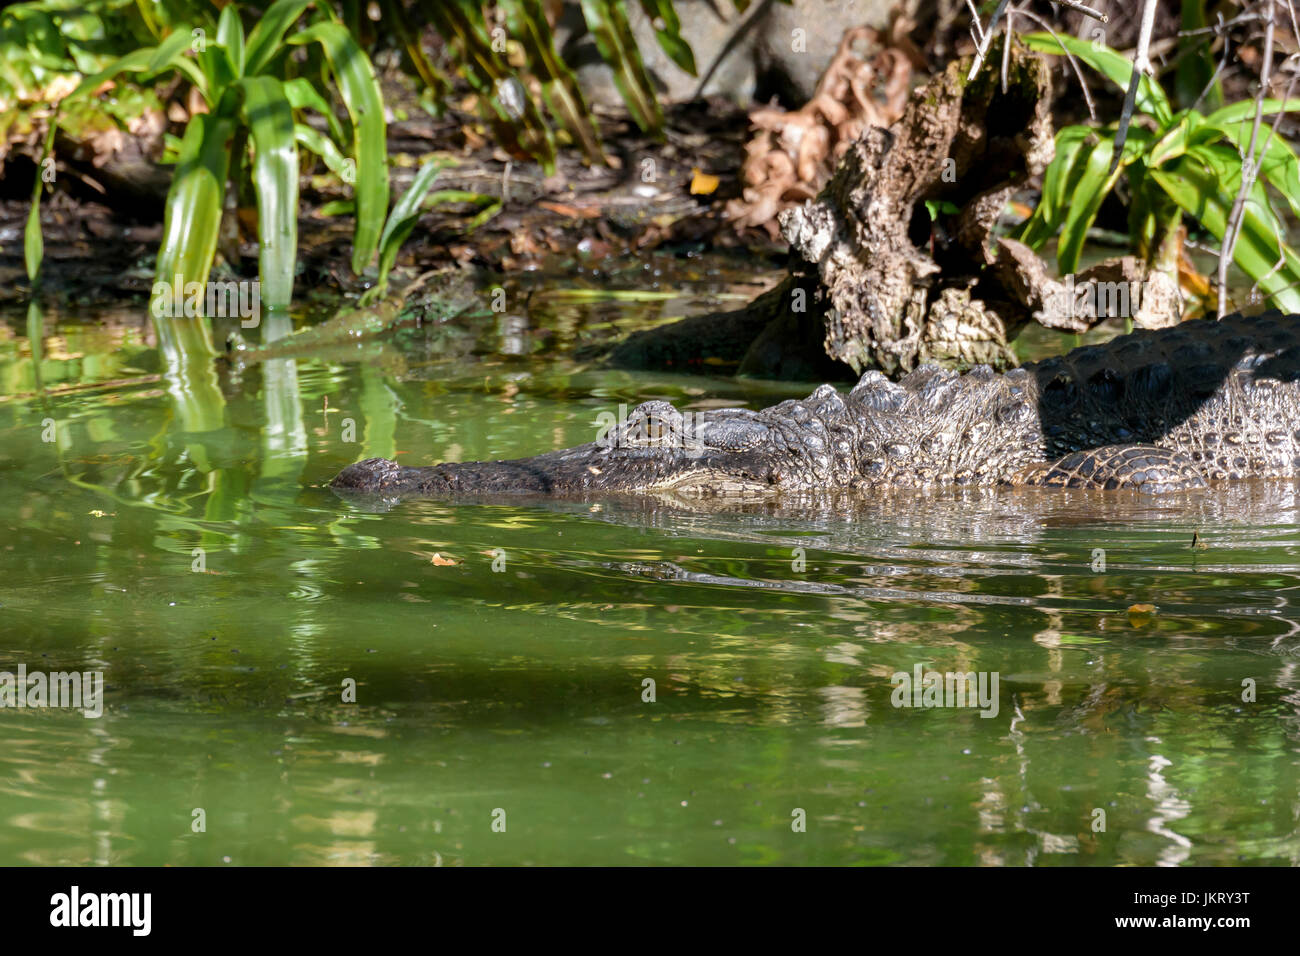 American alligator (Alligator mississippiensis) Big Cypress Bend, Fakahatchee Strand, Florida, USA Stock Photo